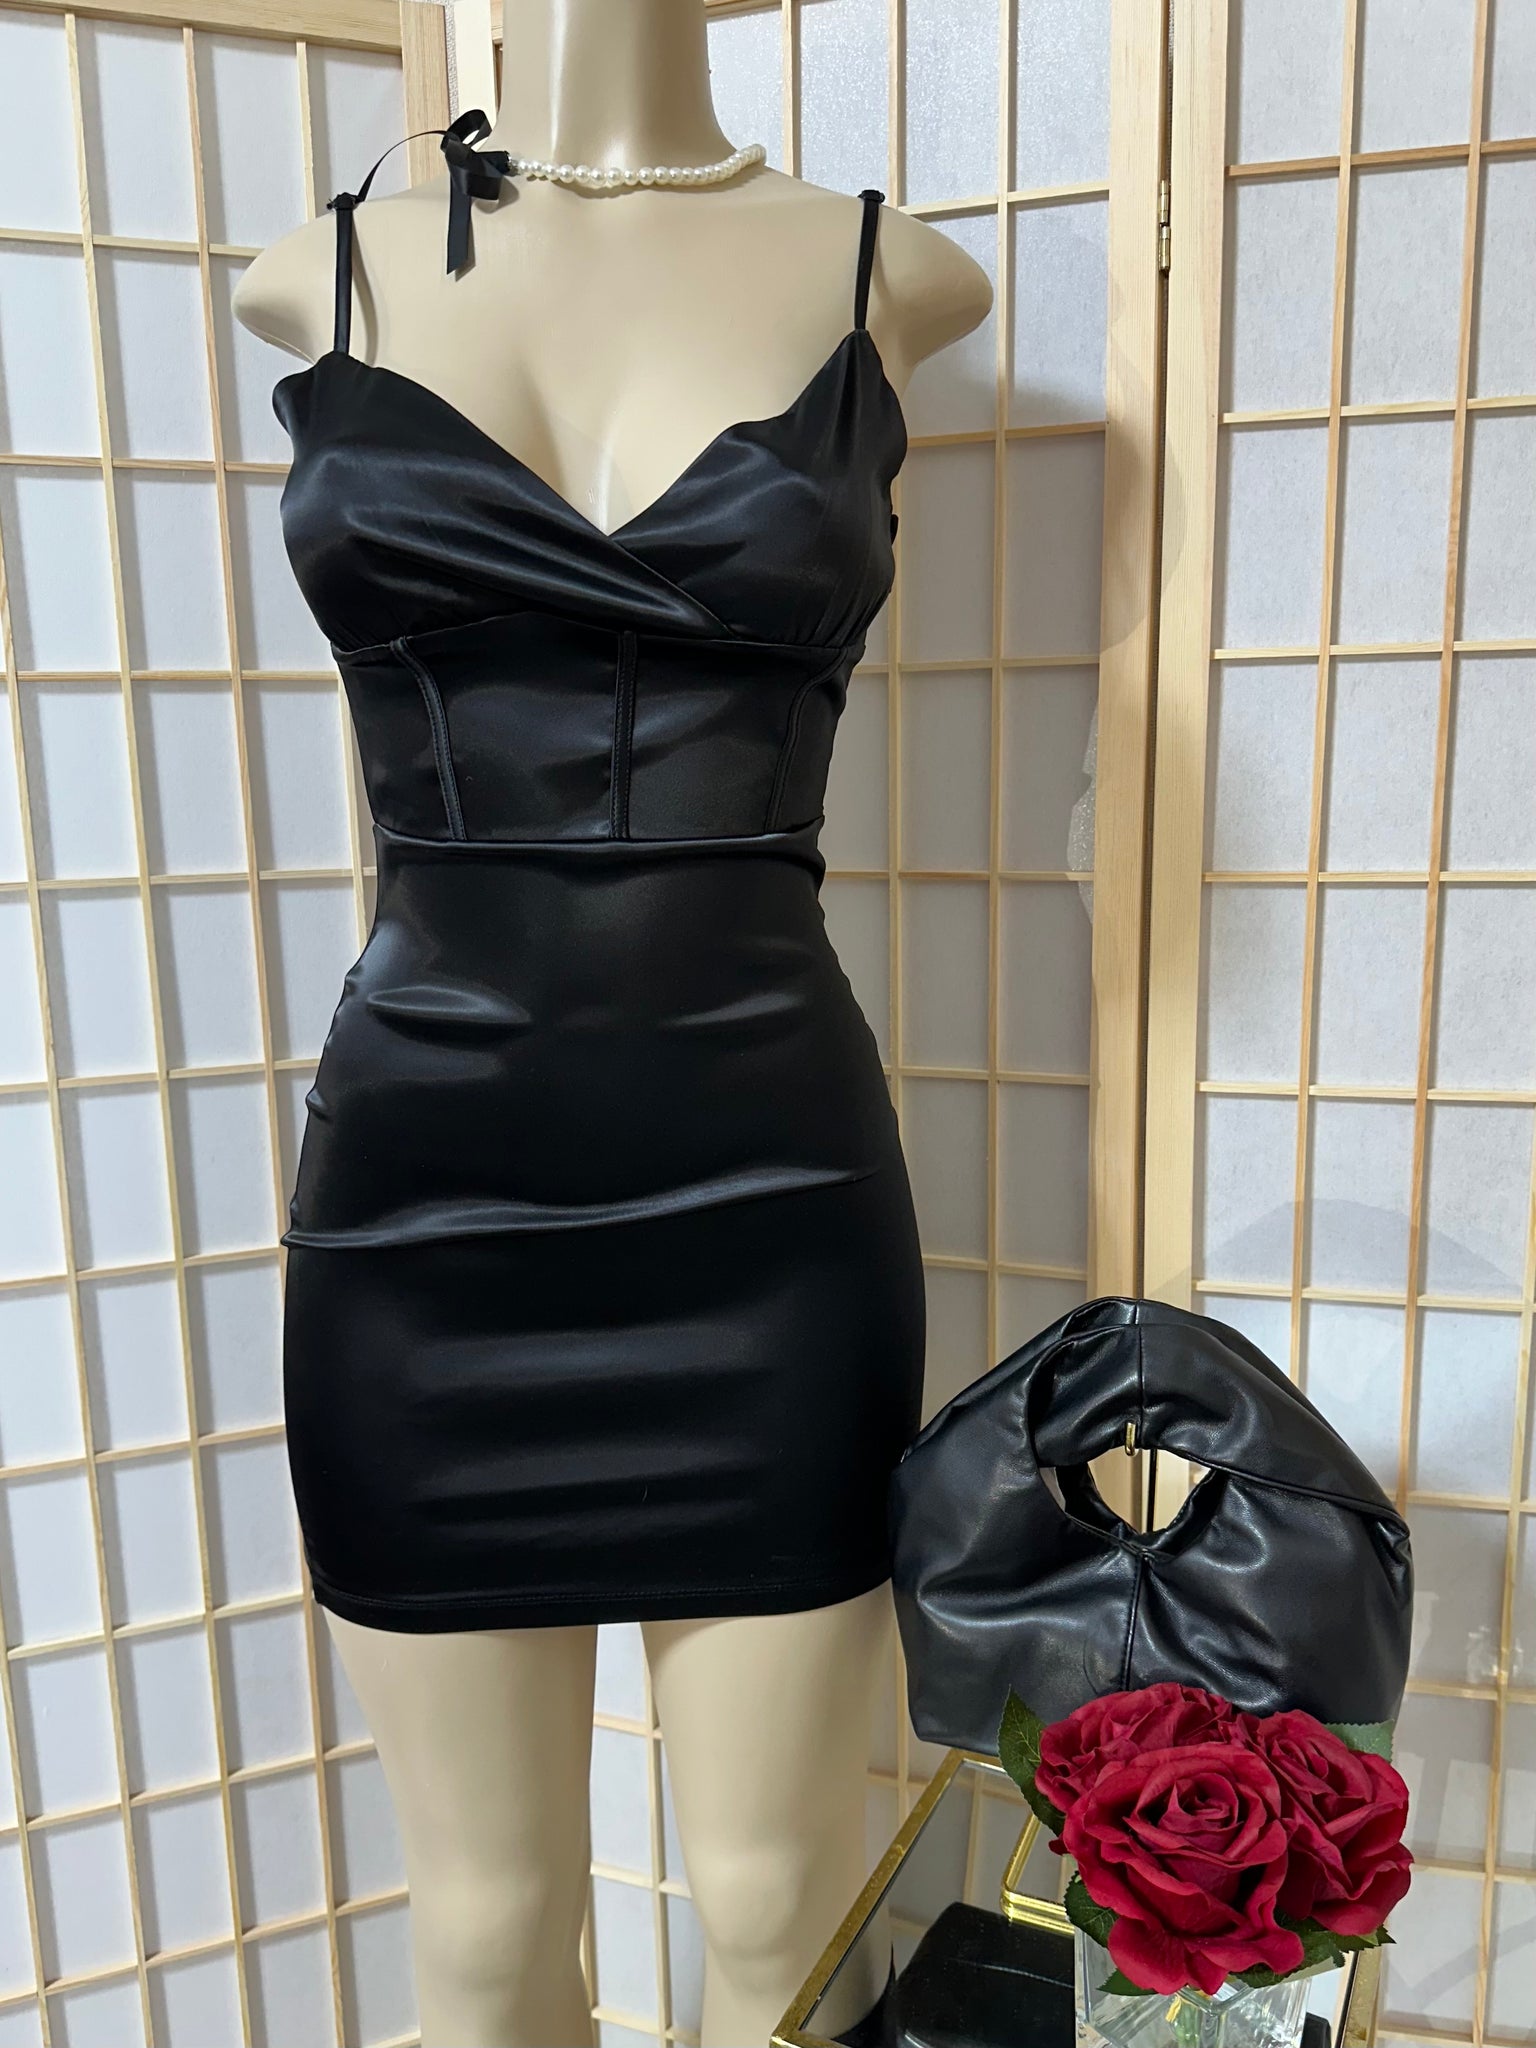 The “My Valentine” Satin Dress